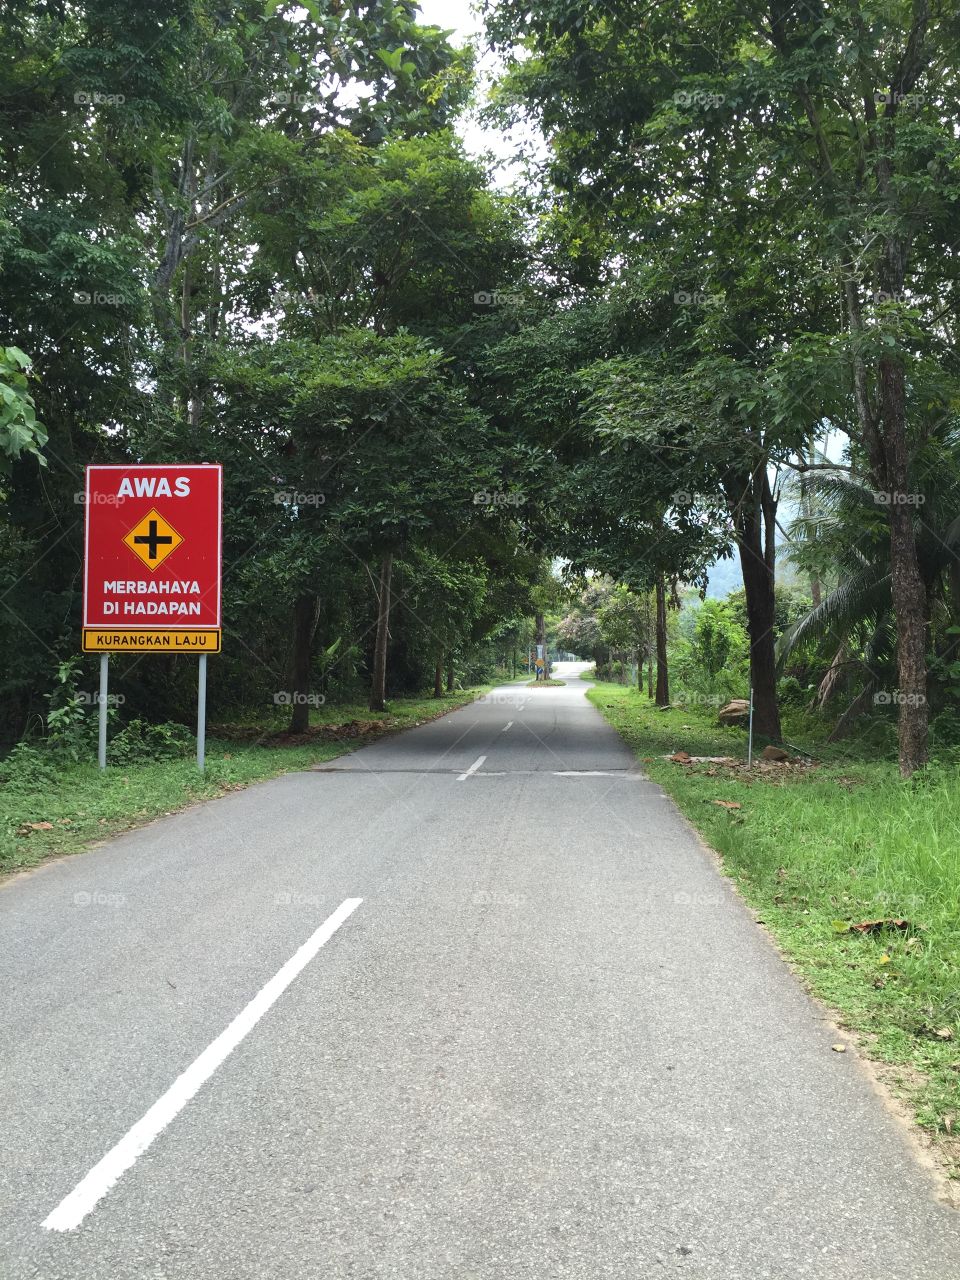 Road to waterfall in Kedah, Malaysia. Taken on 19 April 2015